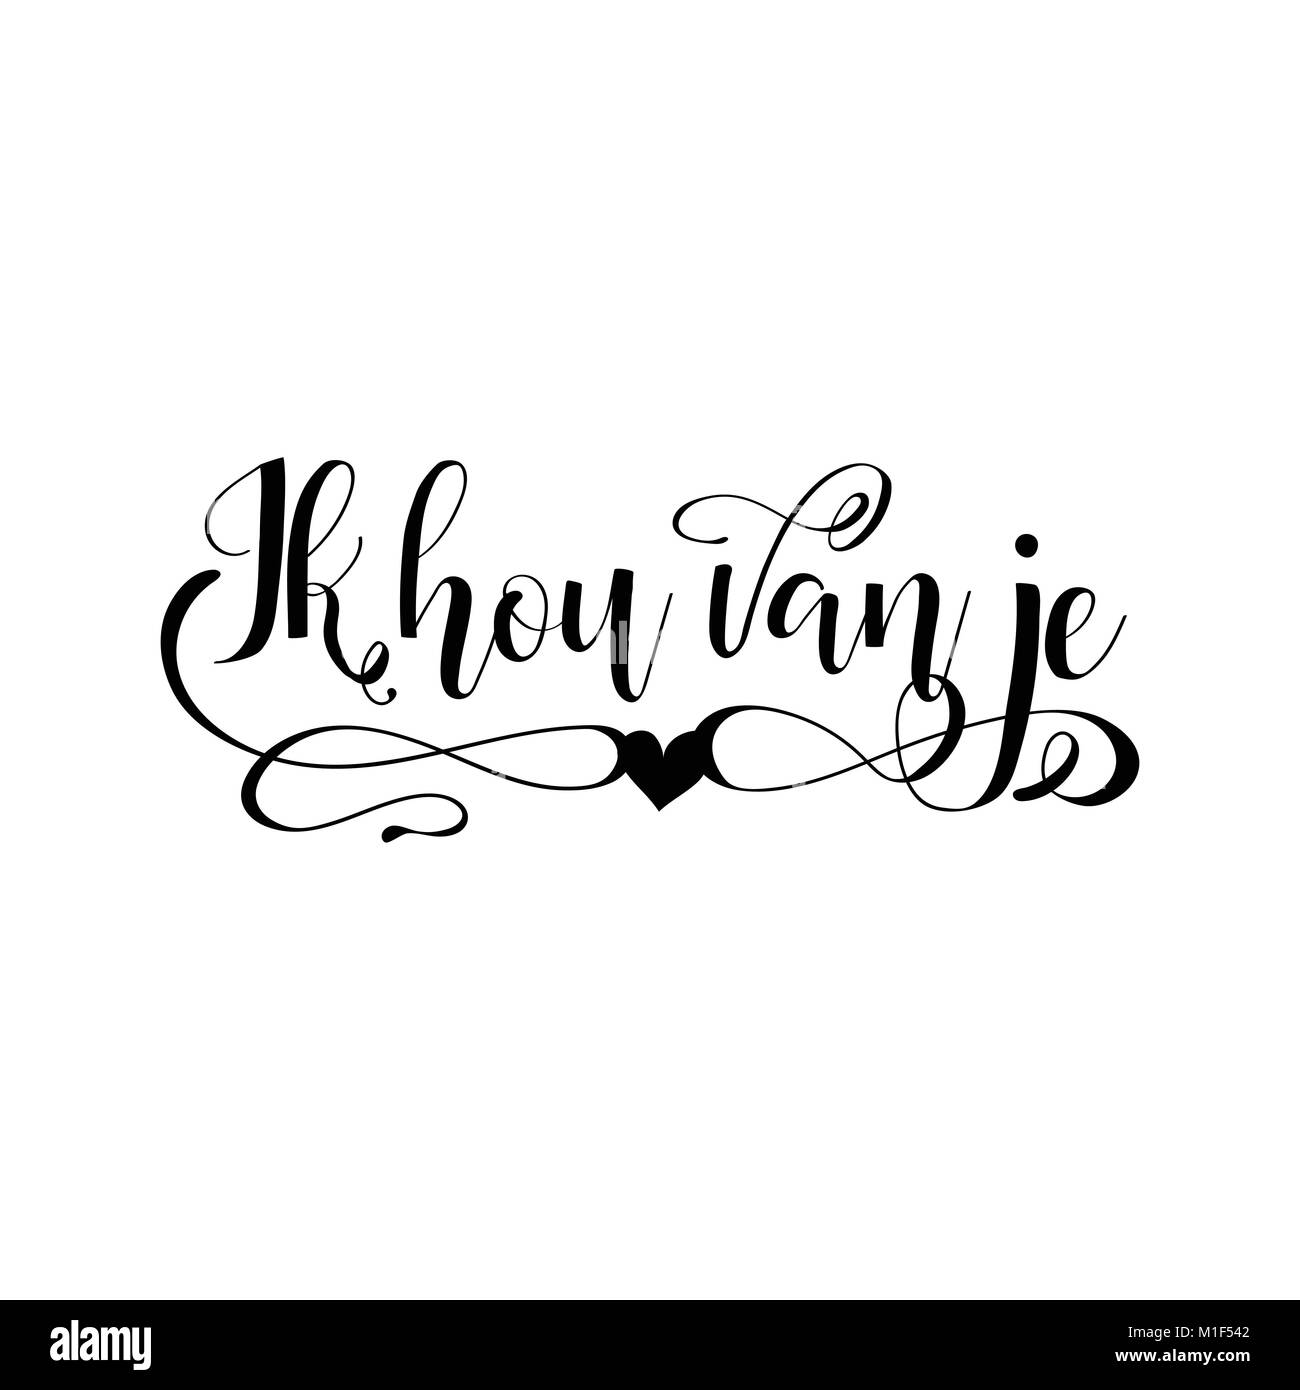 Goede Ik hou van je lettering. translate from Dutch: I love you. Phrase GK-17